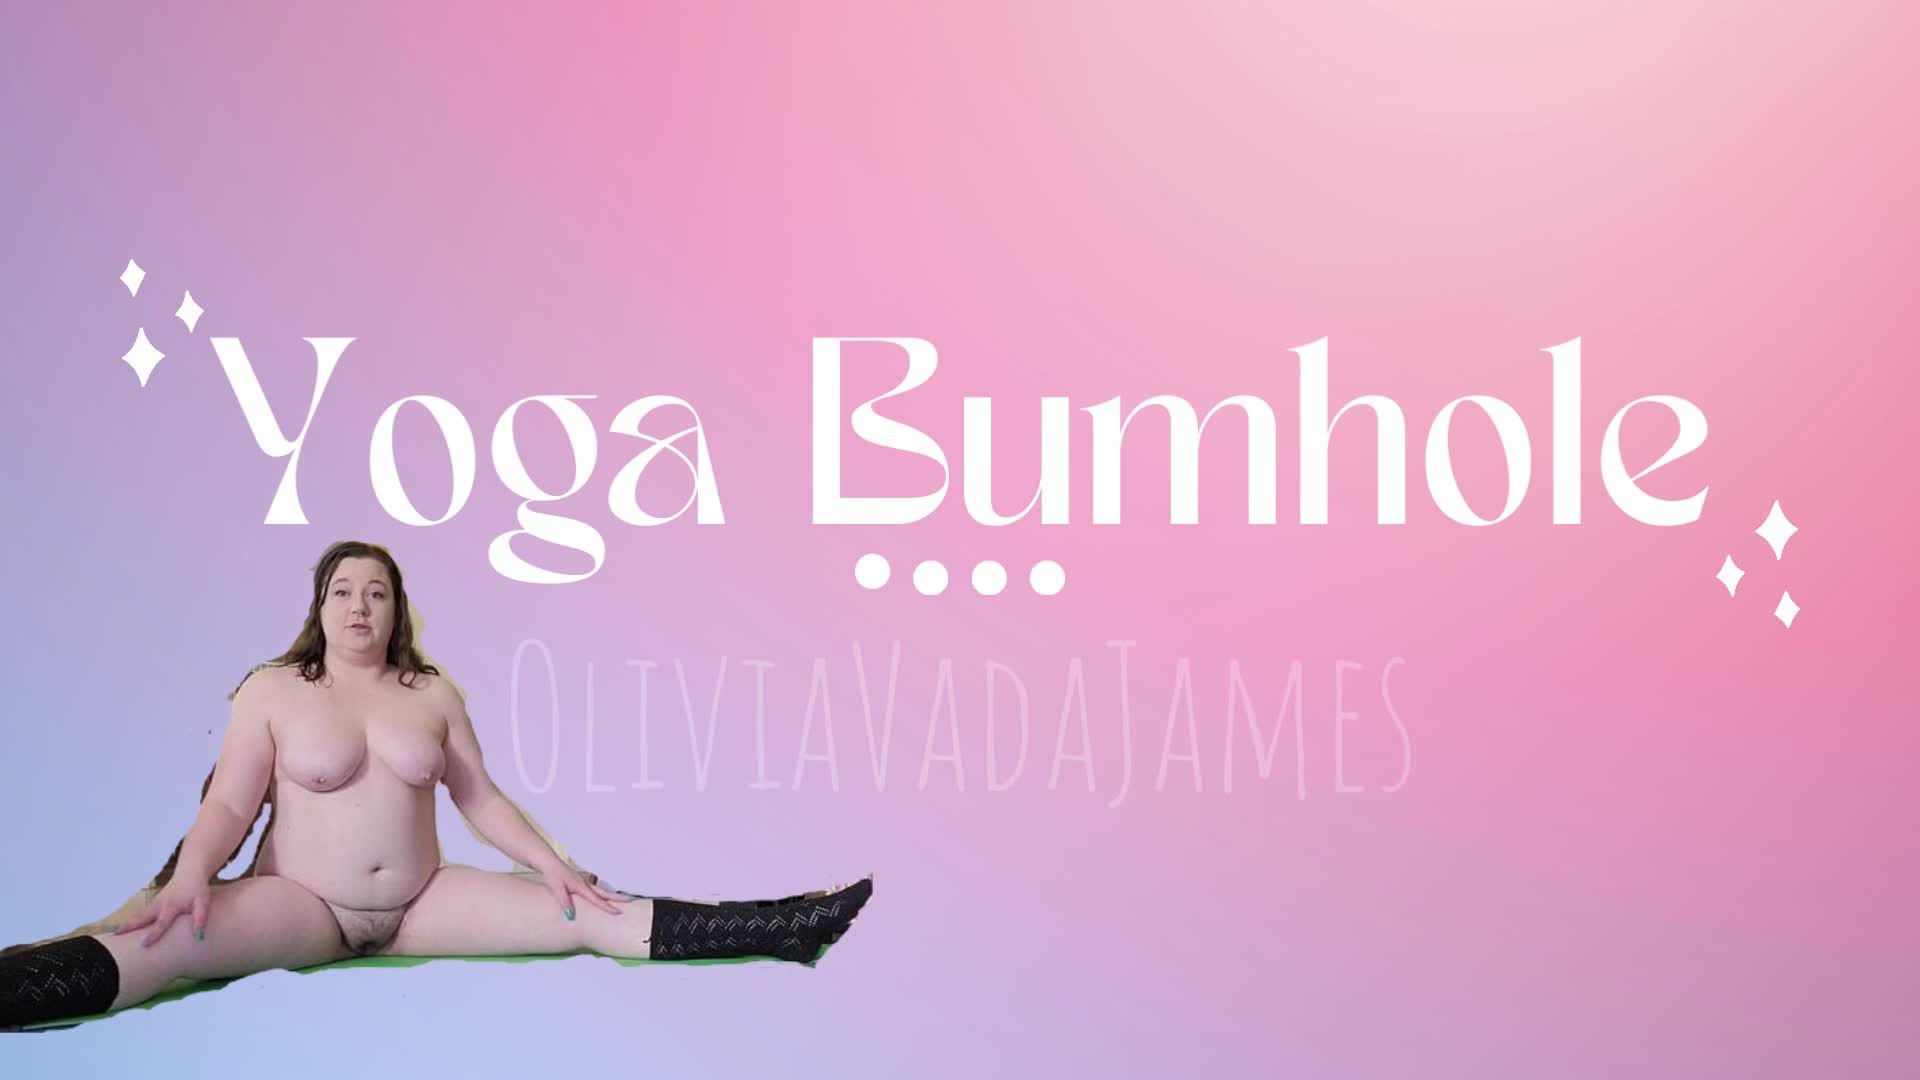 yoga bumhole intro